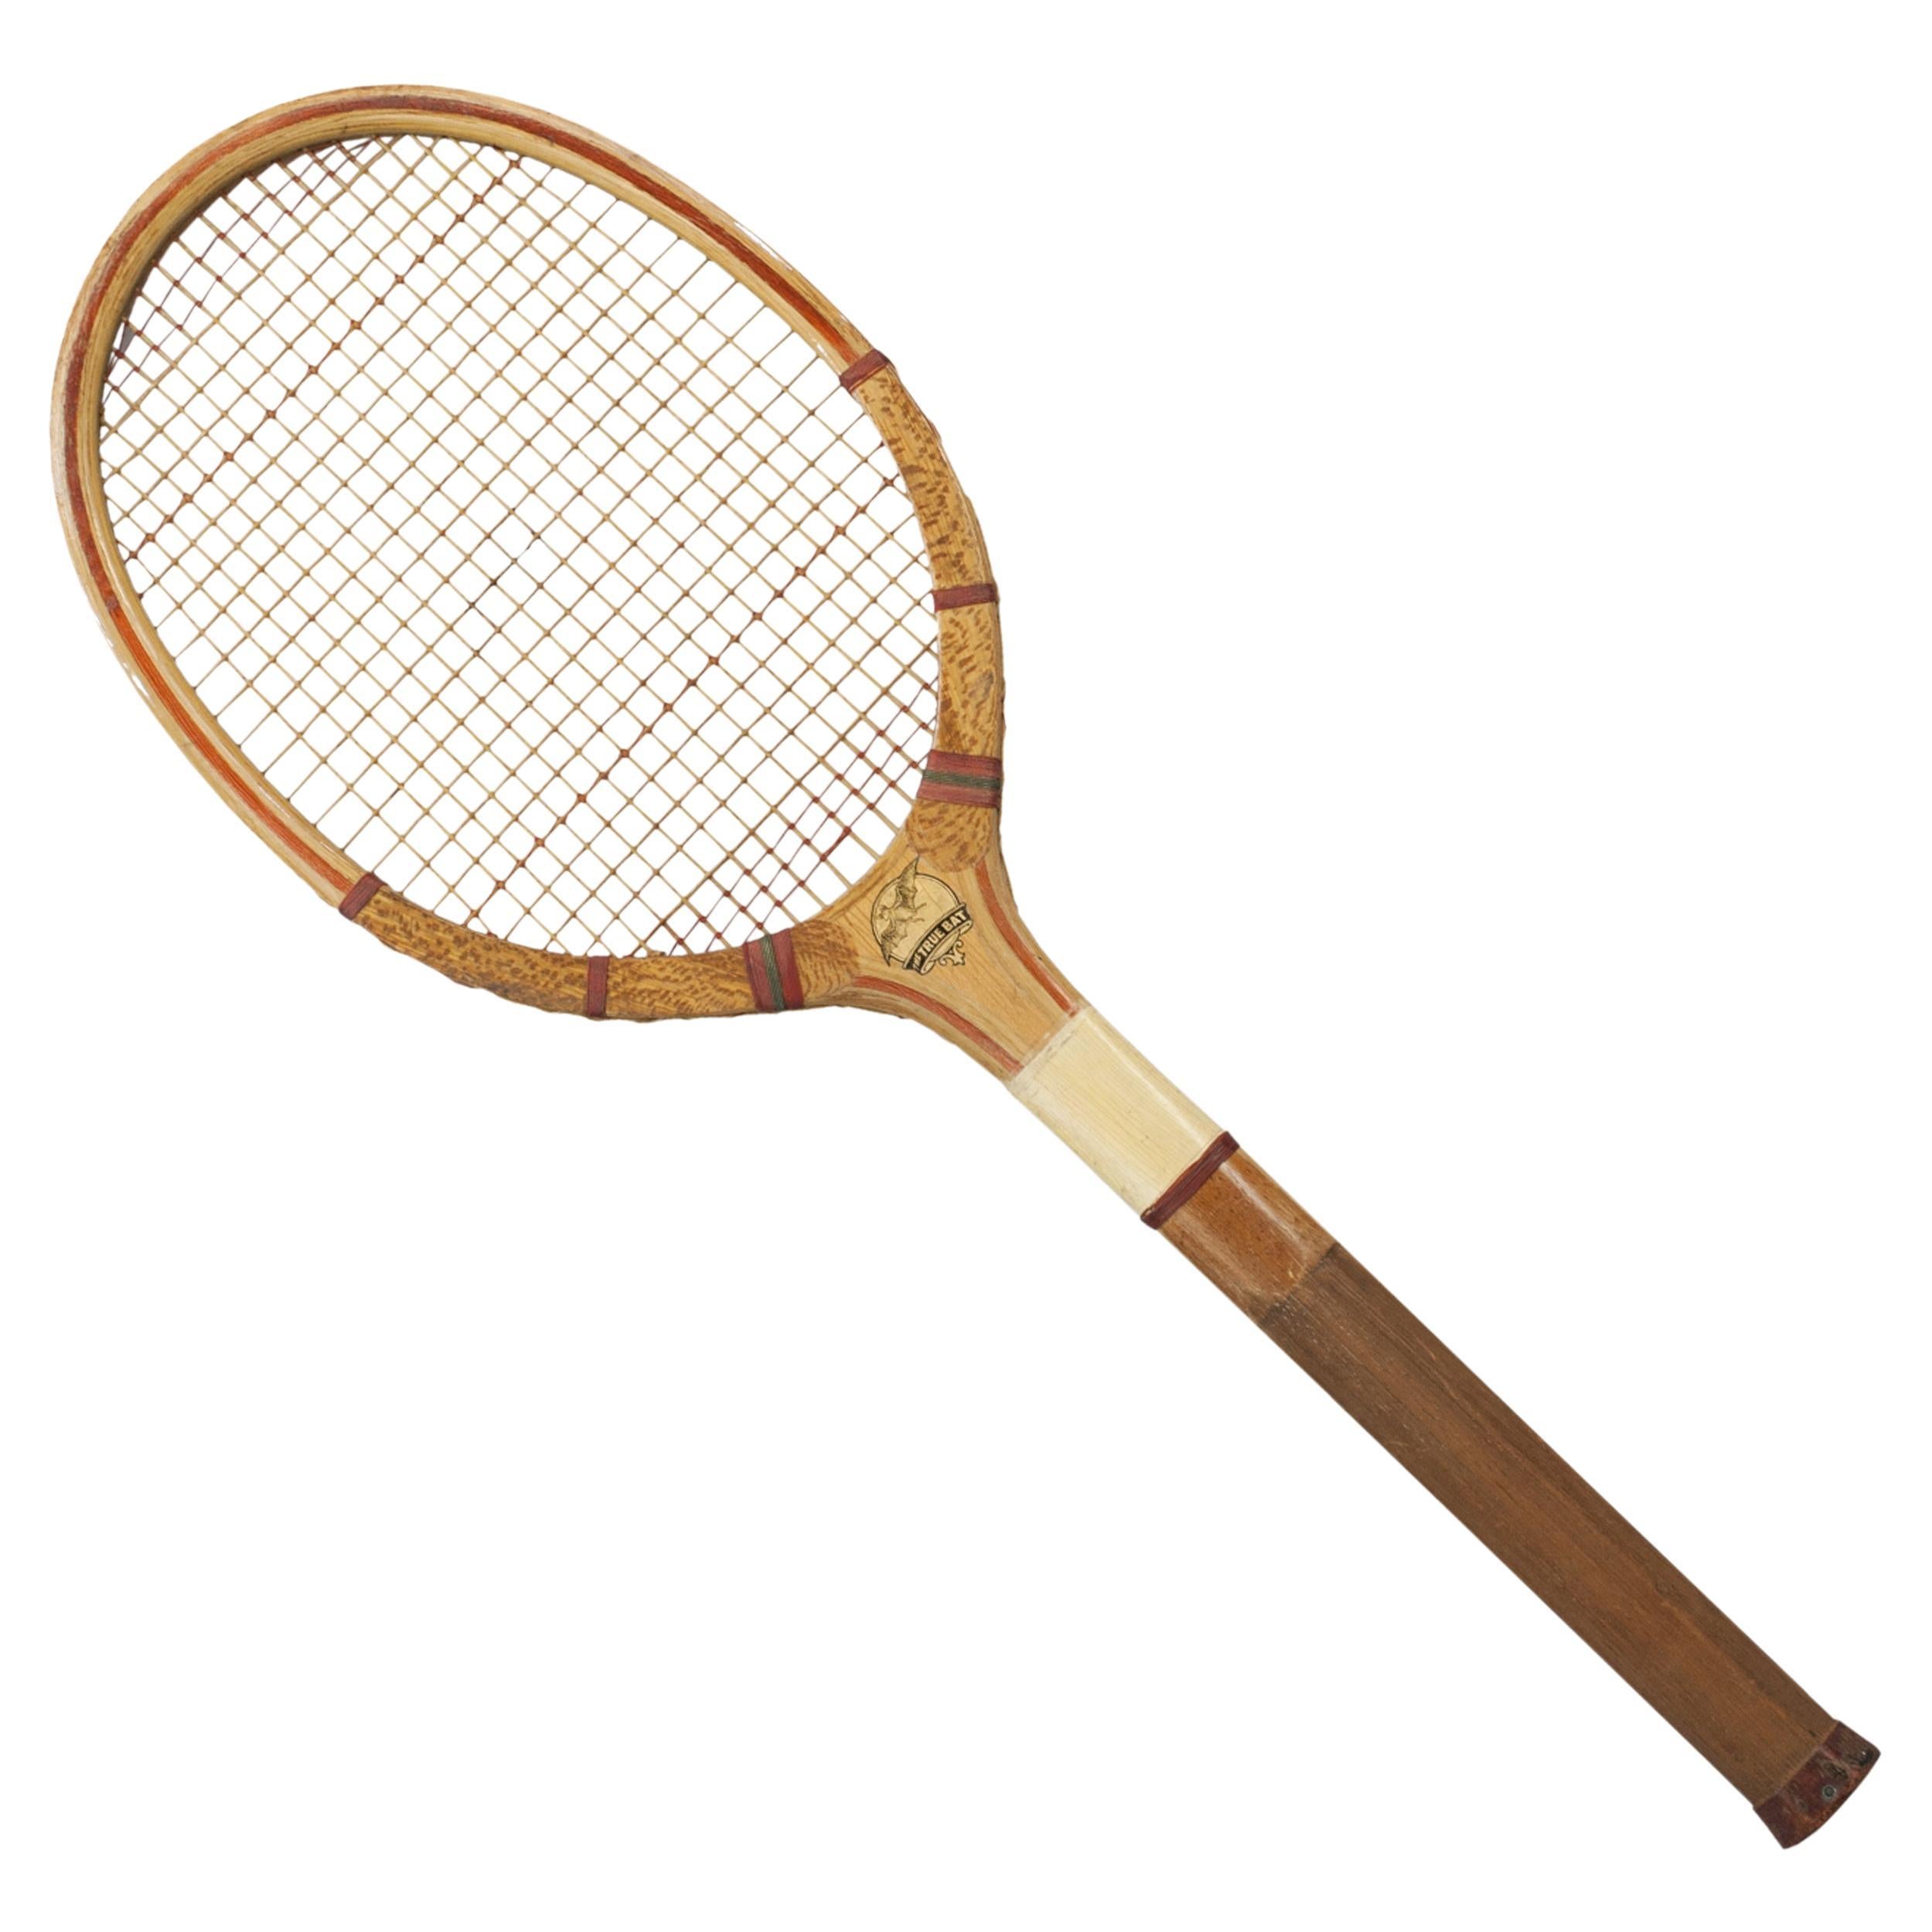 Vintage Tennis Racket, the True Bat